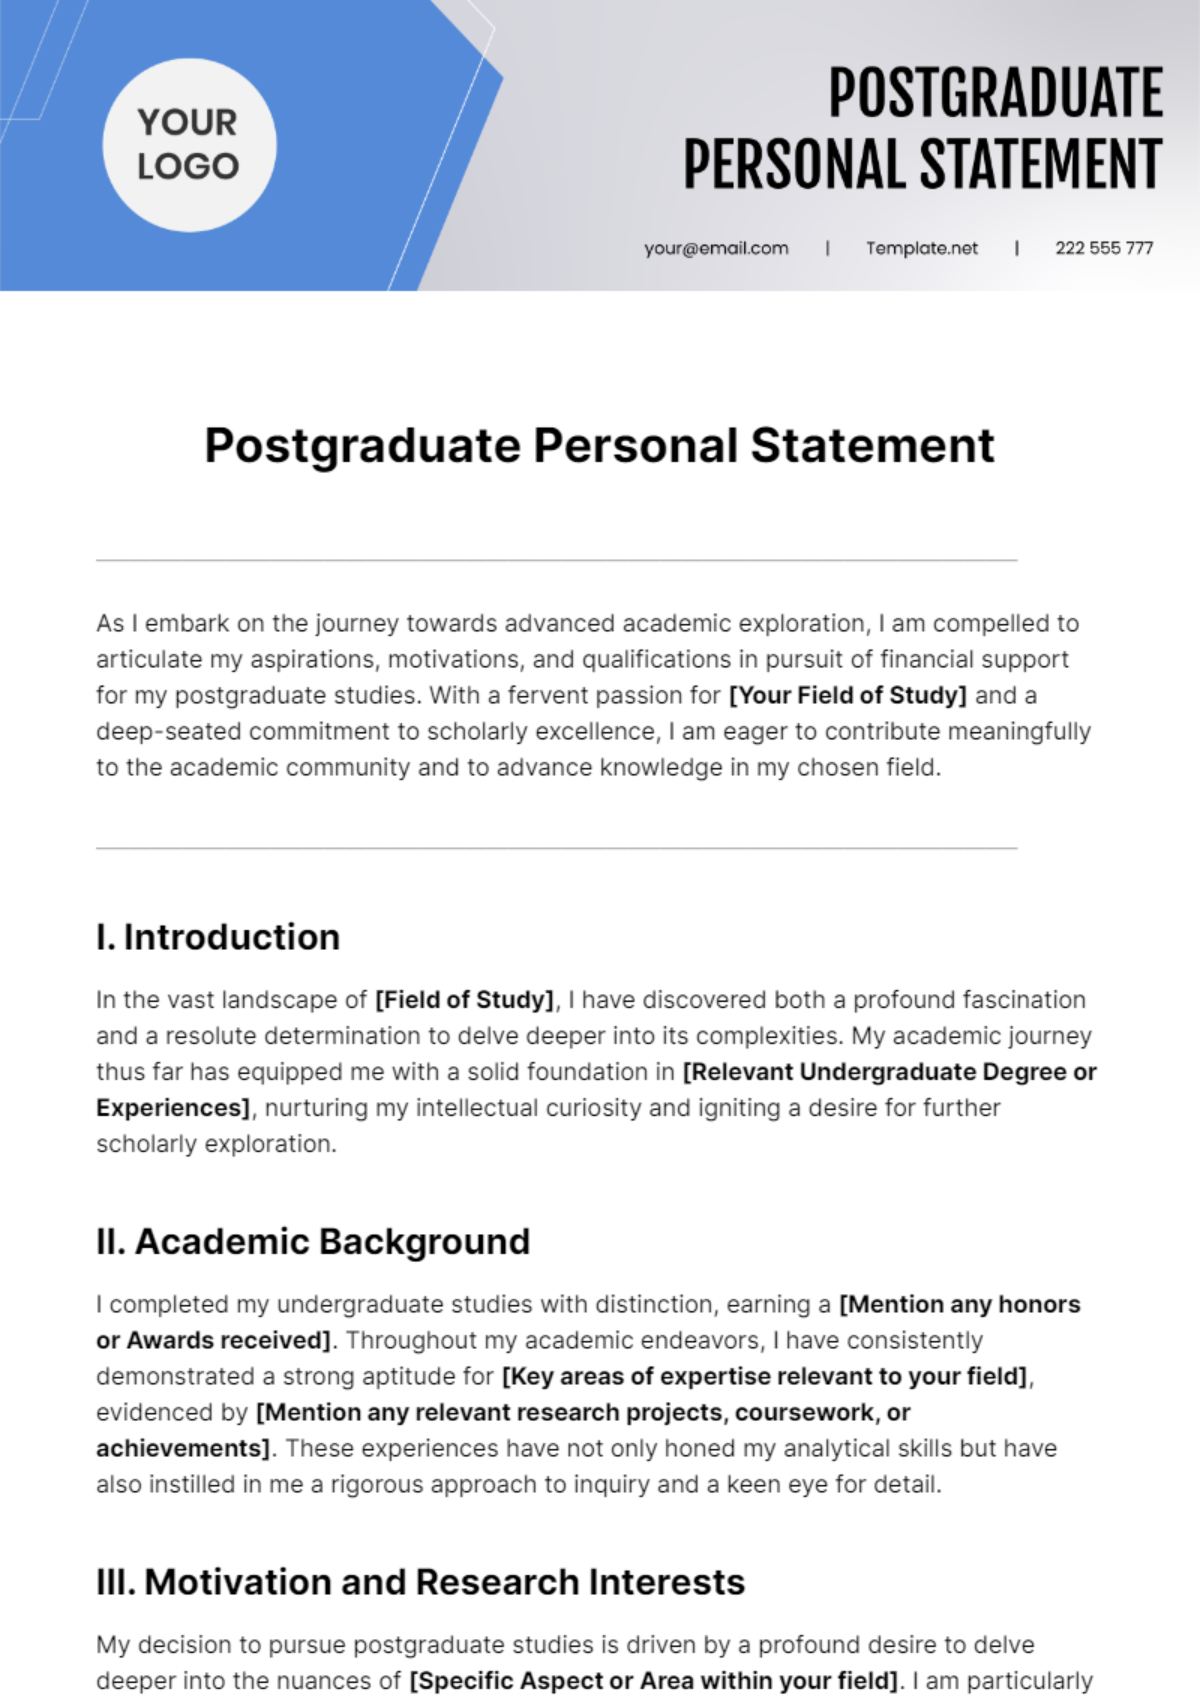 Postgraduate Personal Statement Template